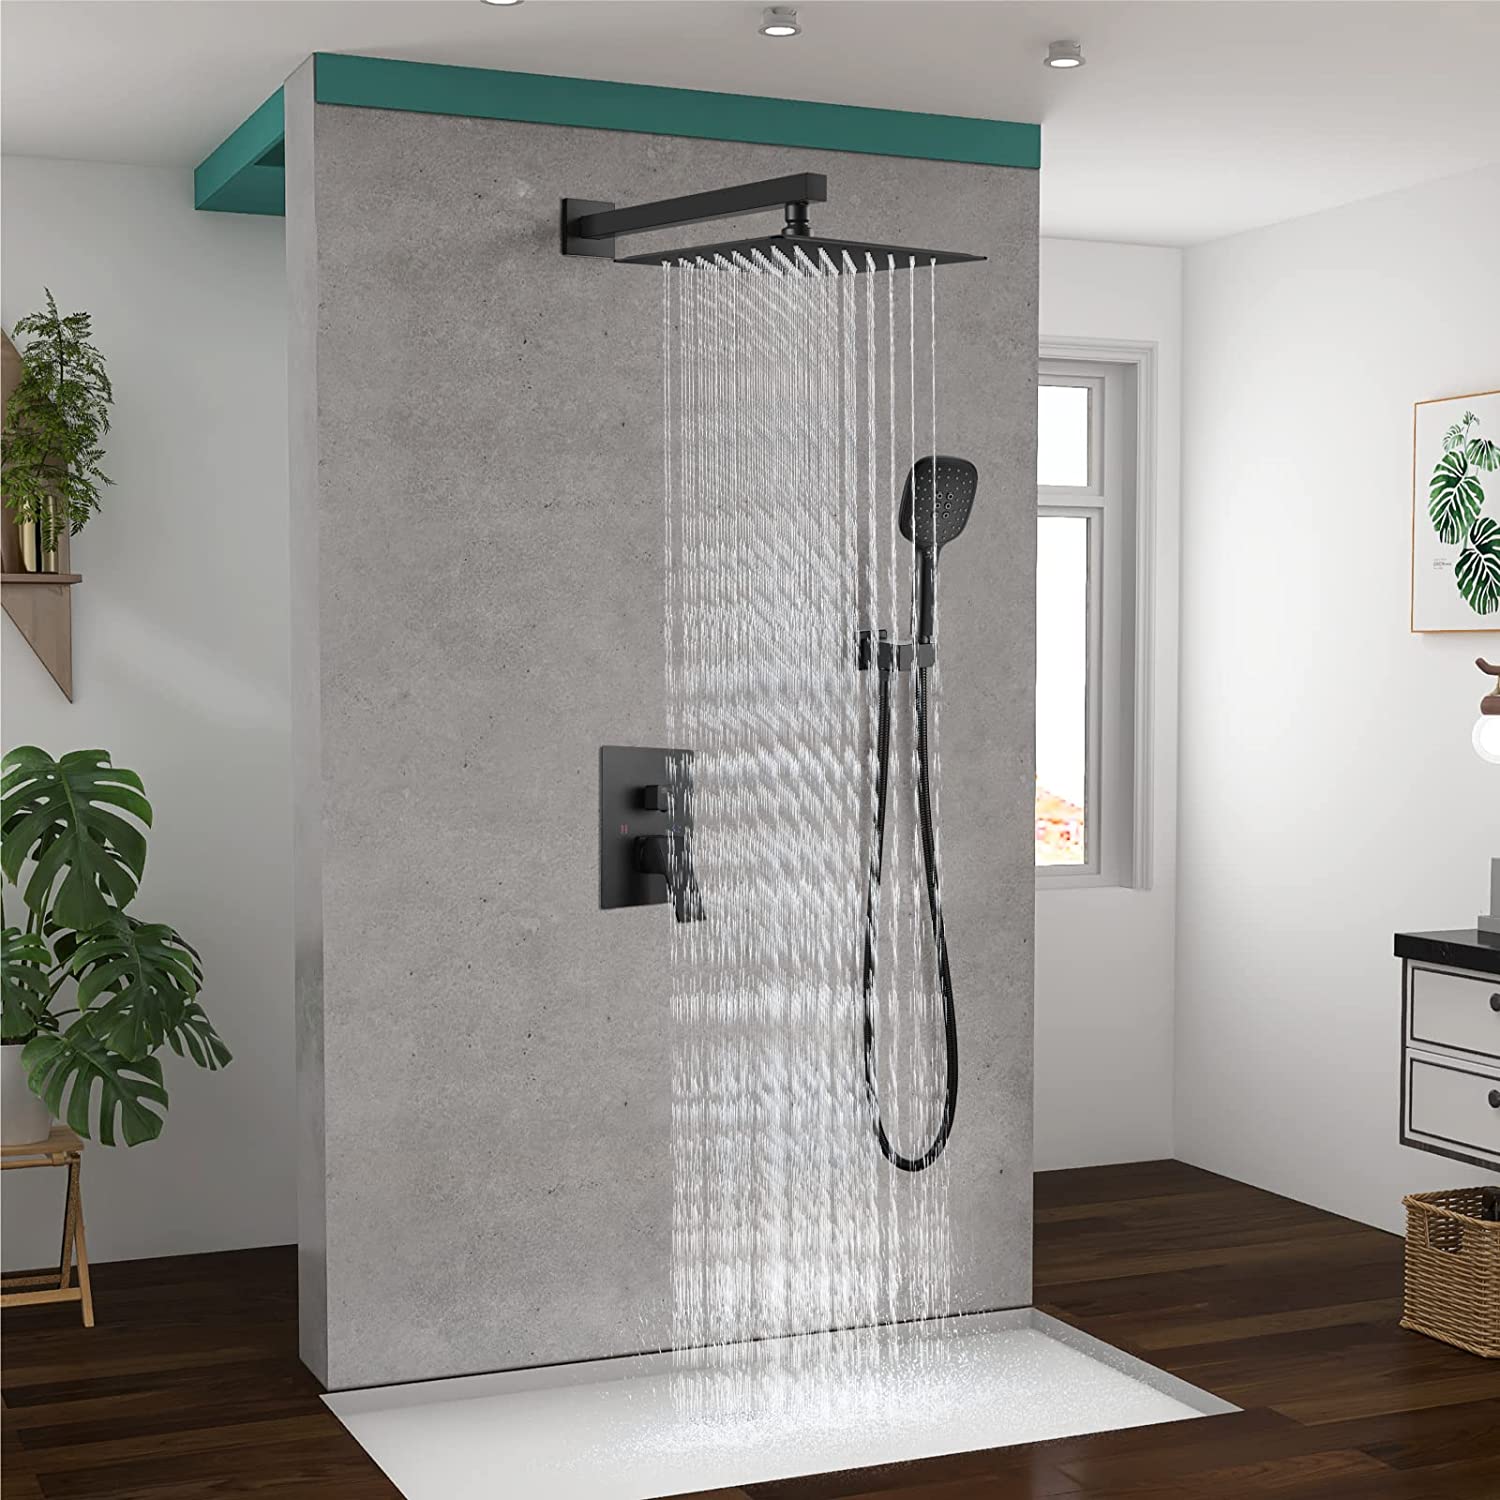 Heyalan Shower System 10 Inch Square Rain Shower Head Shower Faucet Fixture ABS Handheld Shower Sprayer Wall Mount Bathroom Rainfall Showerhead Combo Set High Pressure